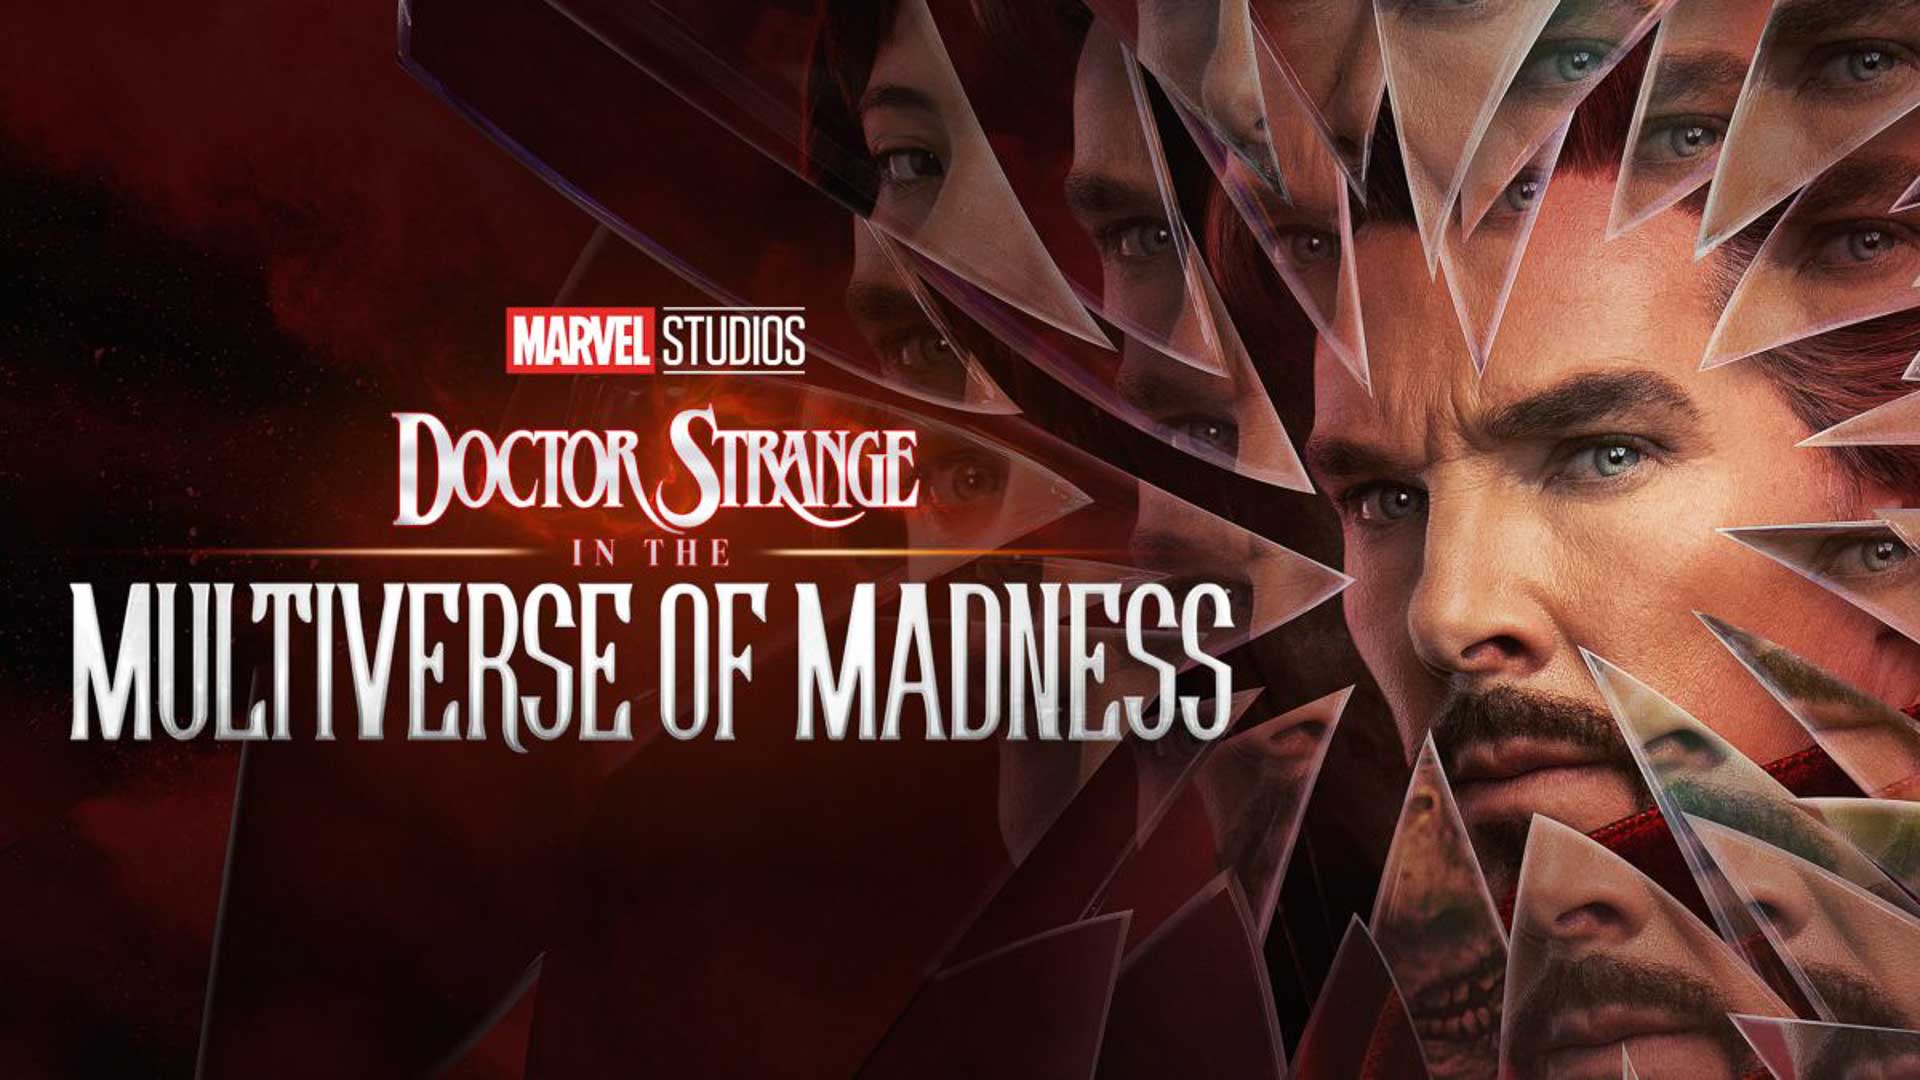 Dr. Strange Multiverse of Madness